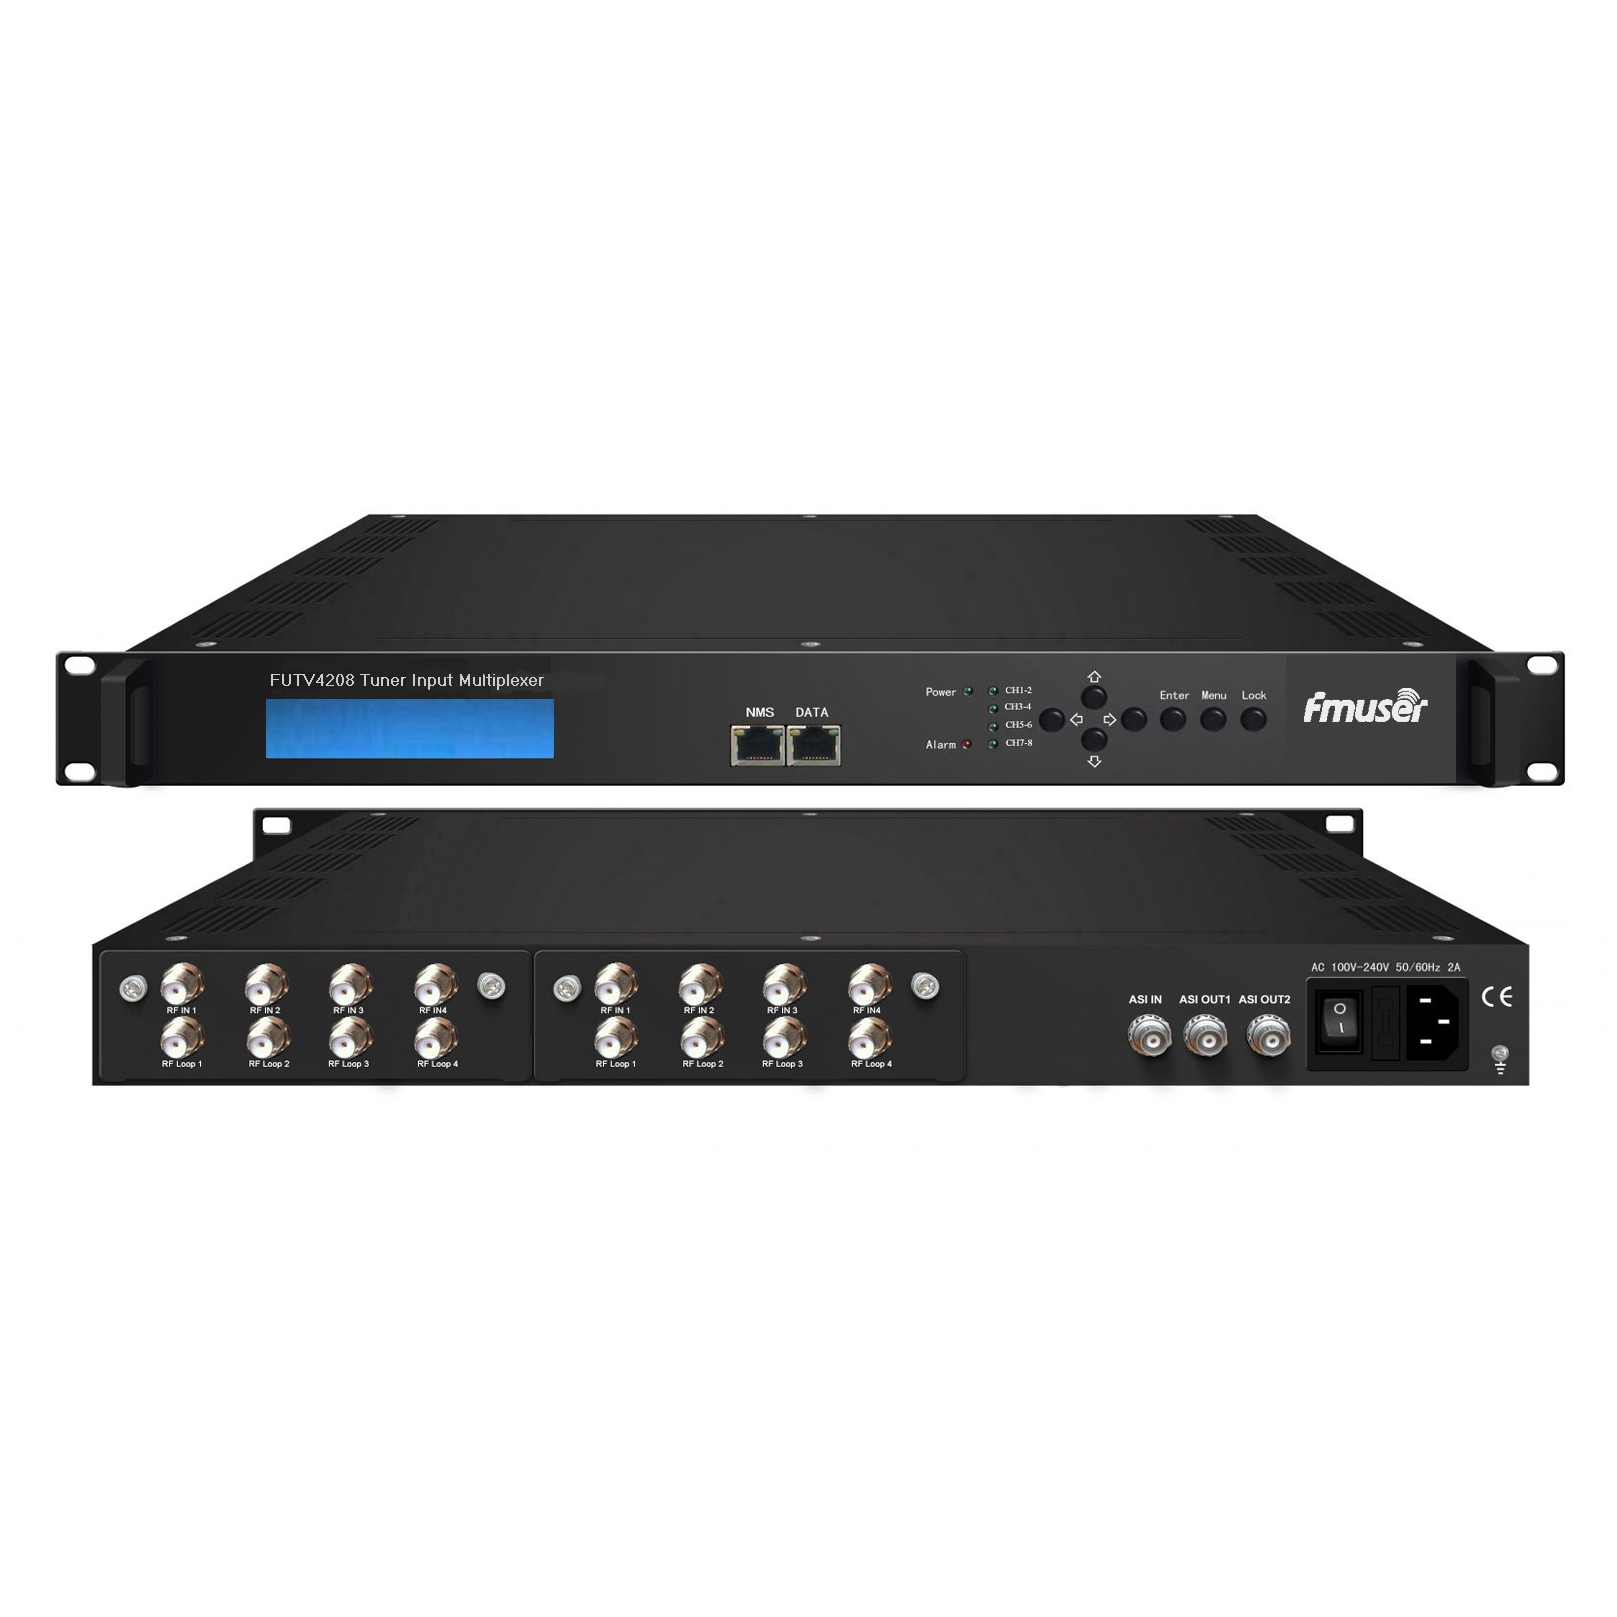 FMUSER FUTV4208 8 Tuner IRD(8 DVB-S2/T RF Input,1 ASI In,2 ASI 1 IP Output)Multiplexer